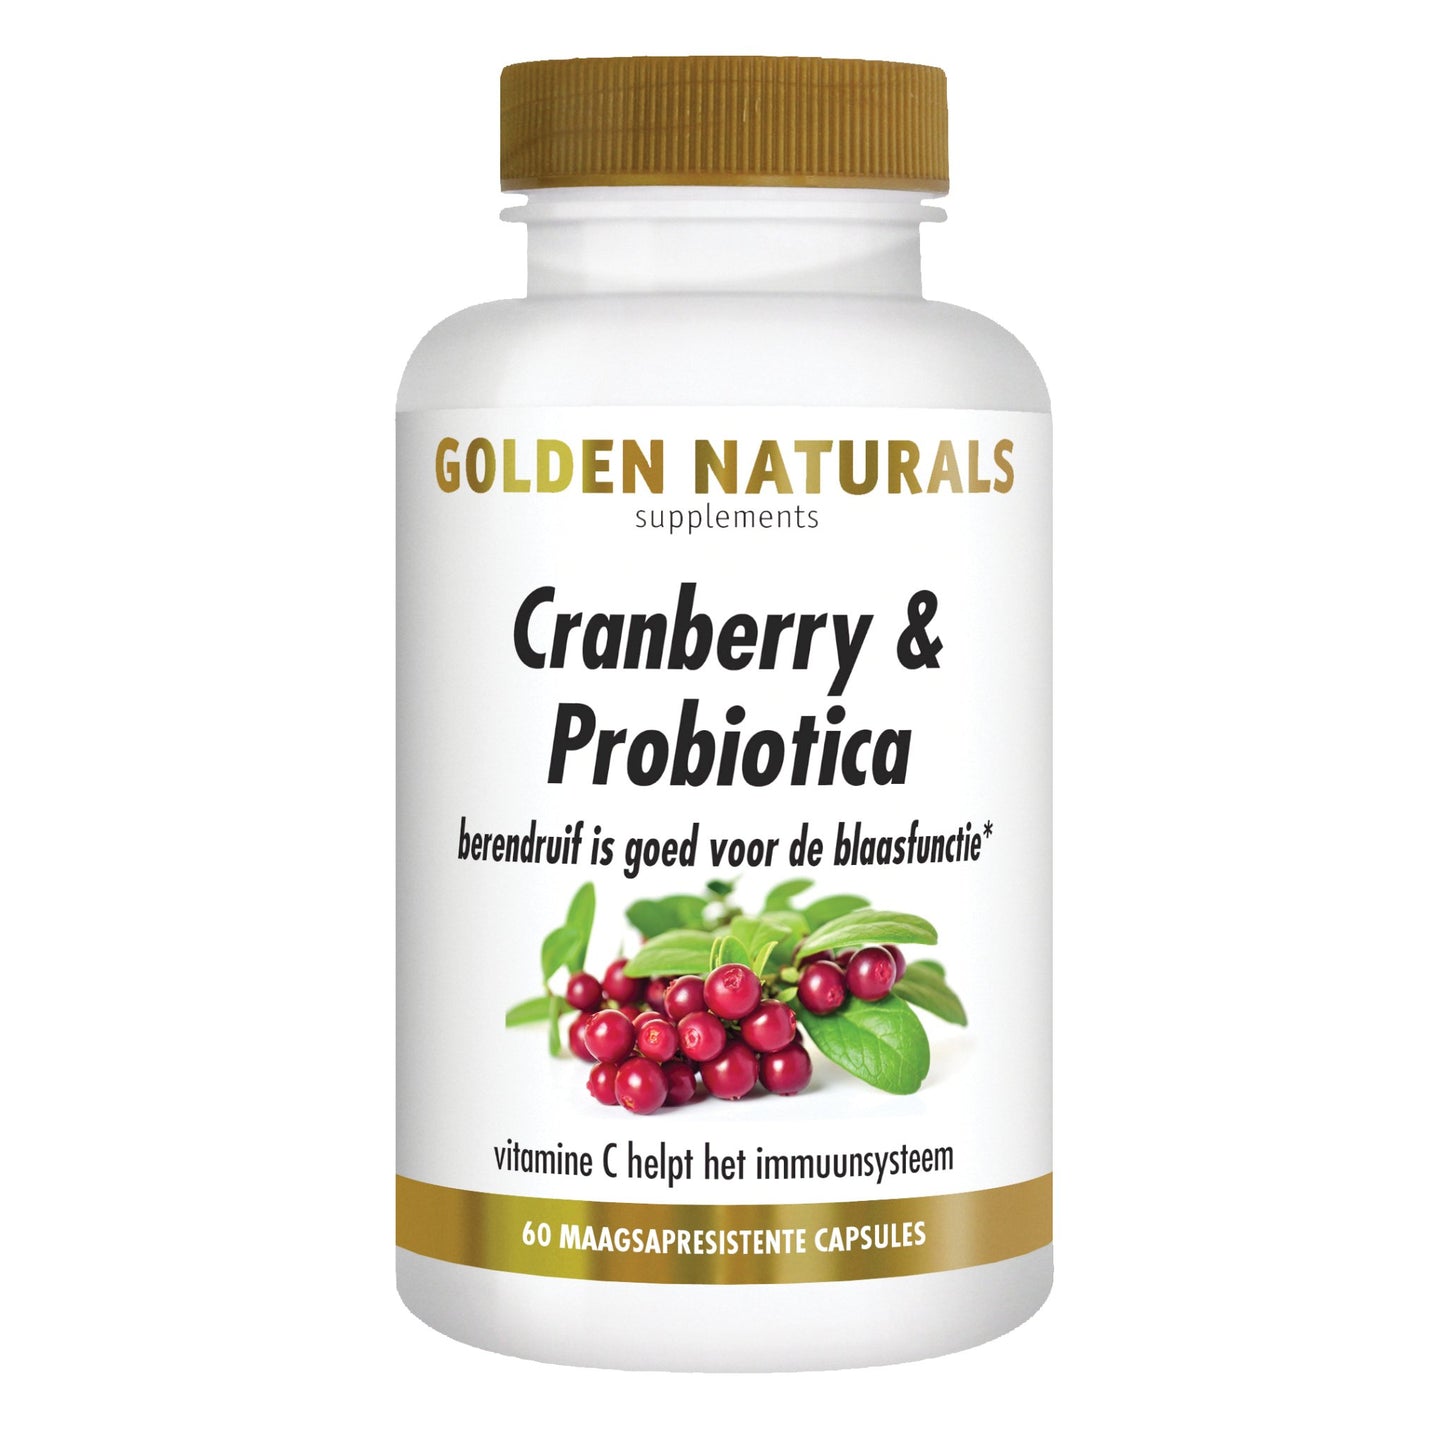 Cranberry & Probiotica - 60 - veganistische maagsapresistente capsules Supplement Golden Naturals   